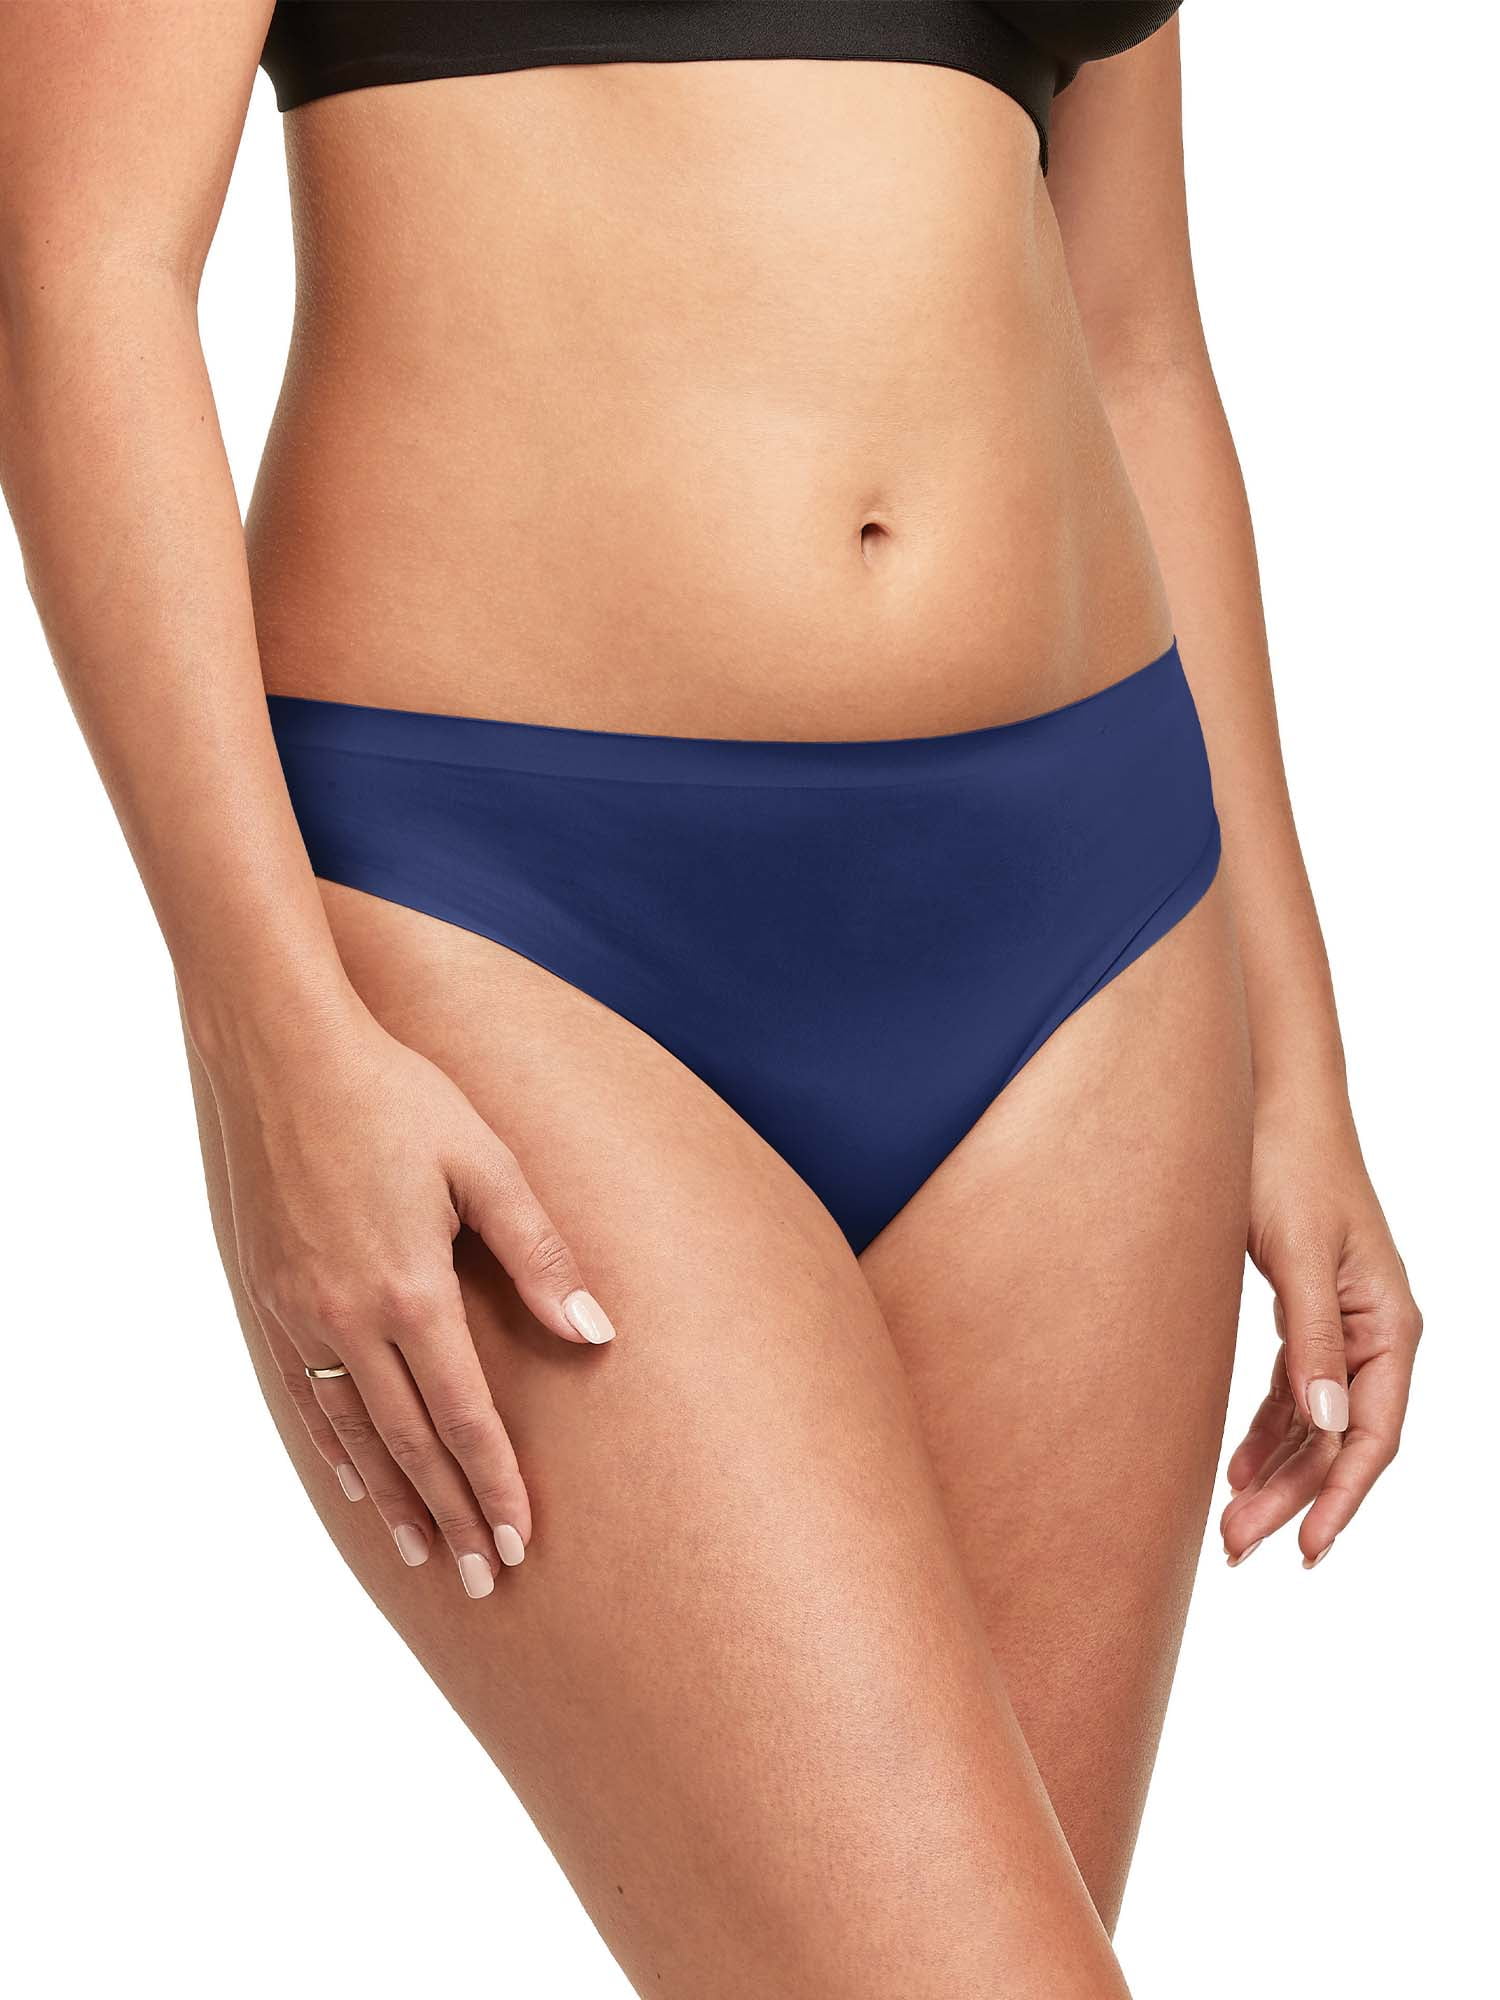 Modal Lite Extra Soft, Bikini Cut Women's Underwear (5-pack